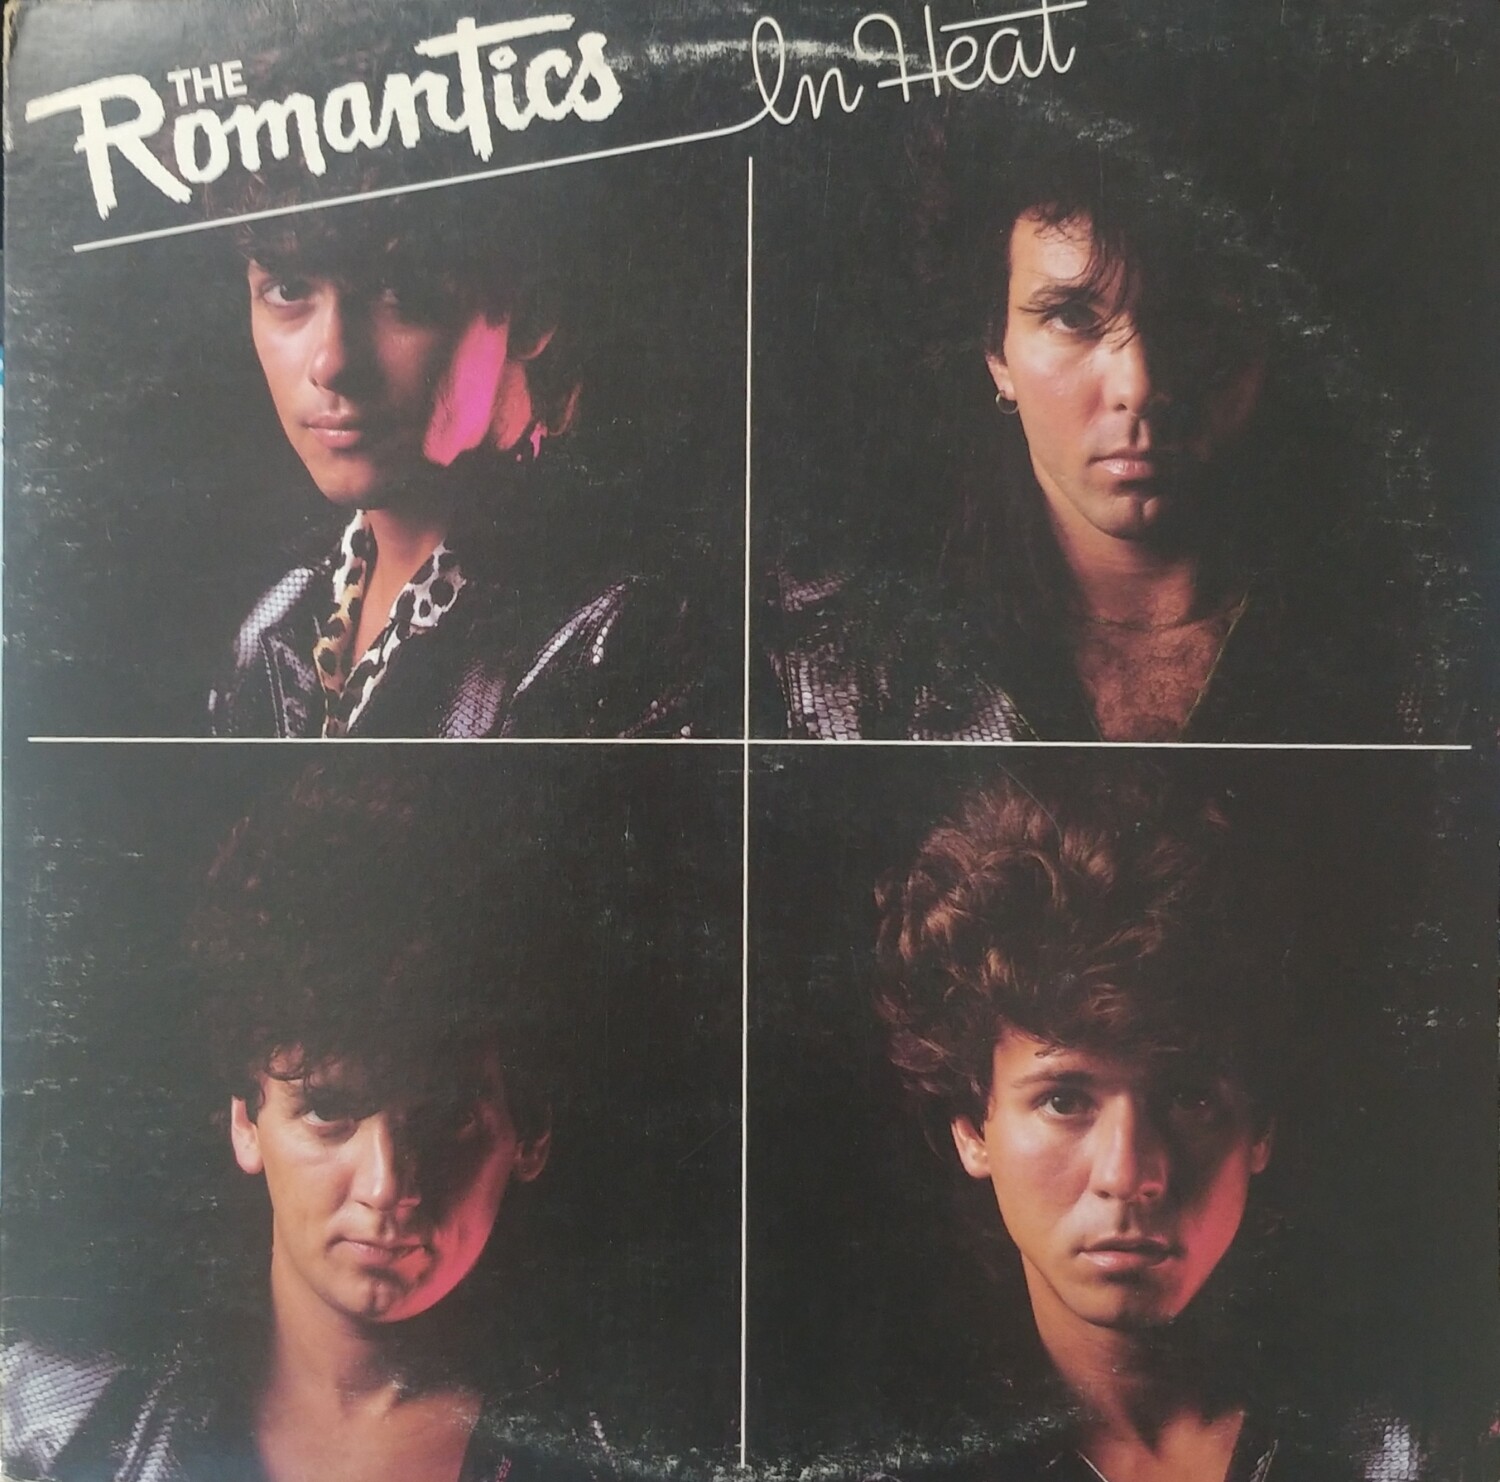 The Romantics - In heat